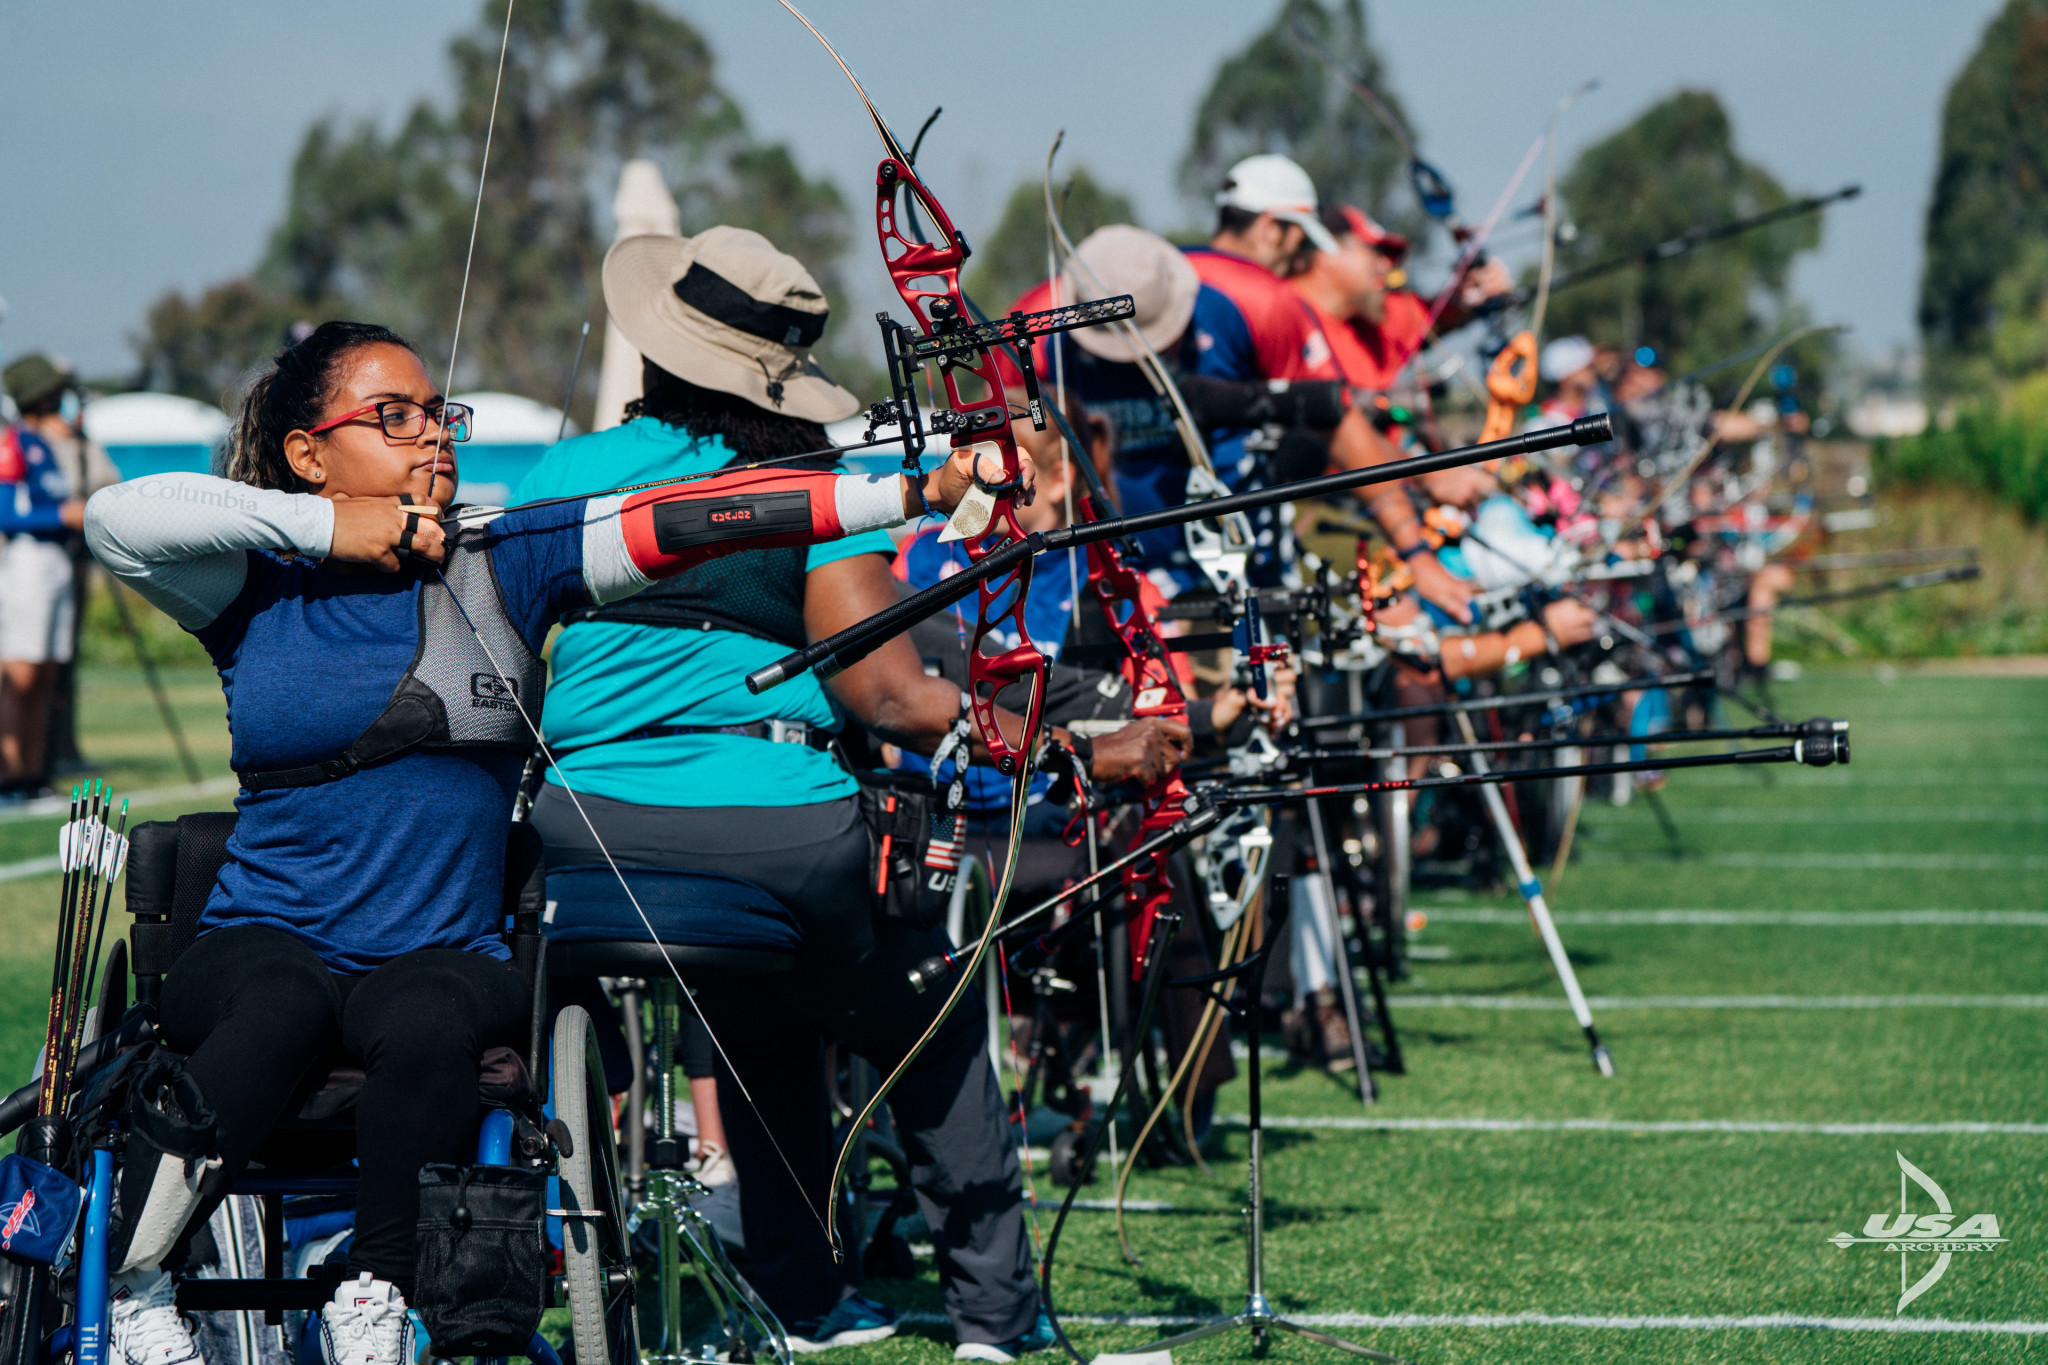 USA Archery has partnered with Move United to develop Para archery ©USA Archery